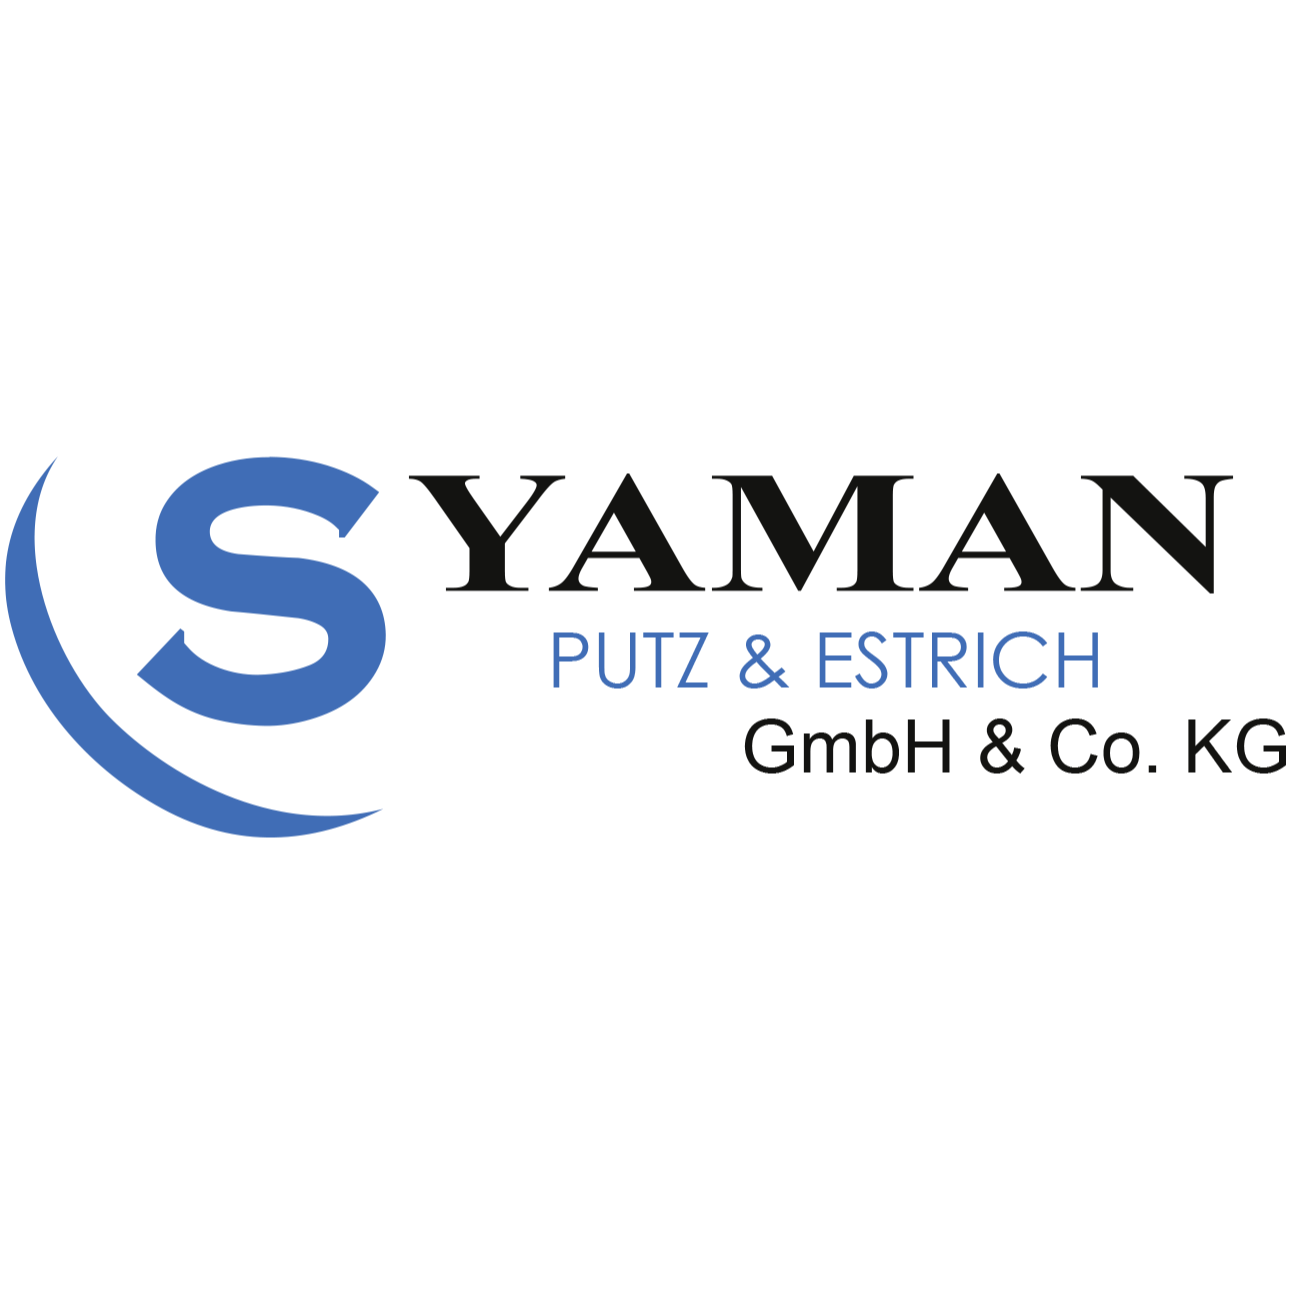 S. Yaman Putz & Estrich GmbH & Co. KG